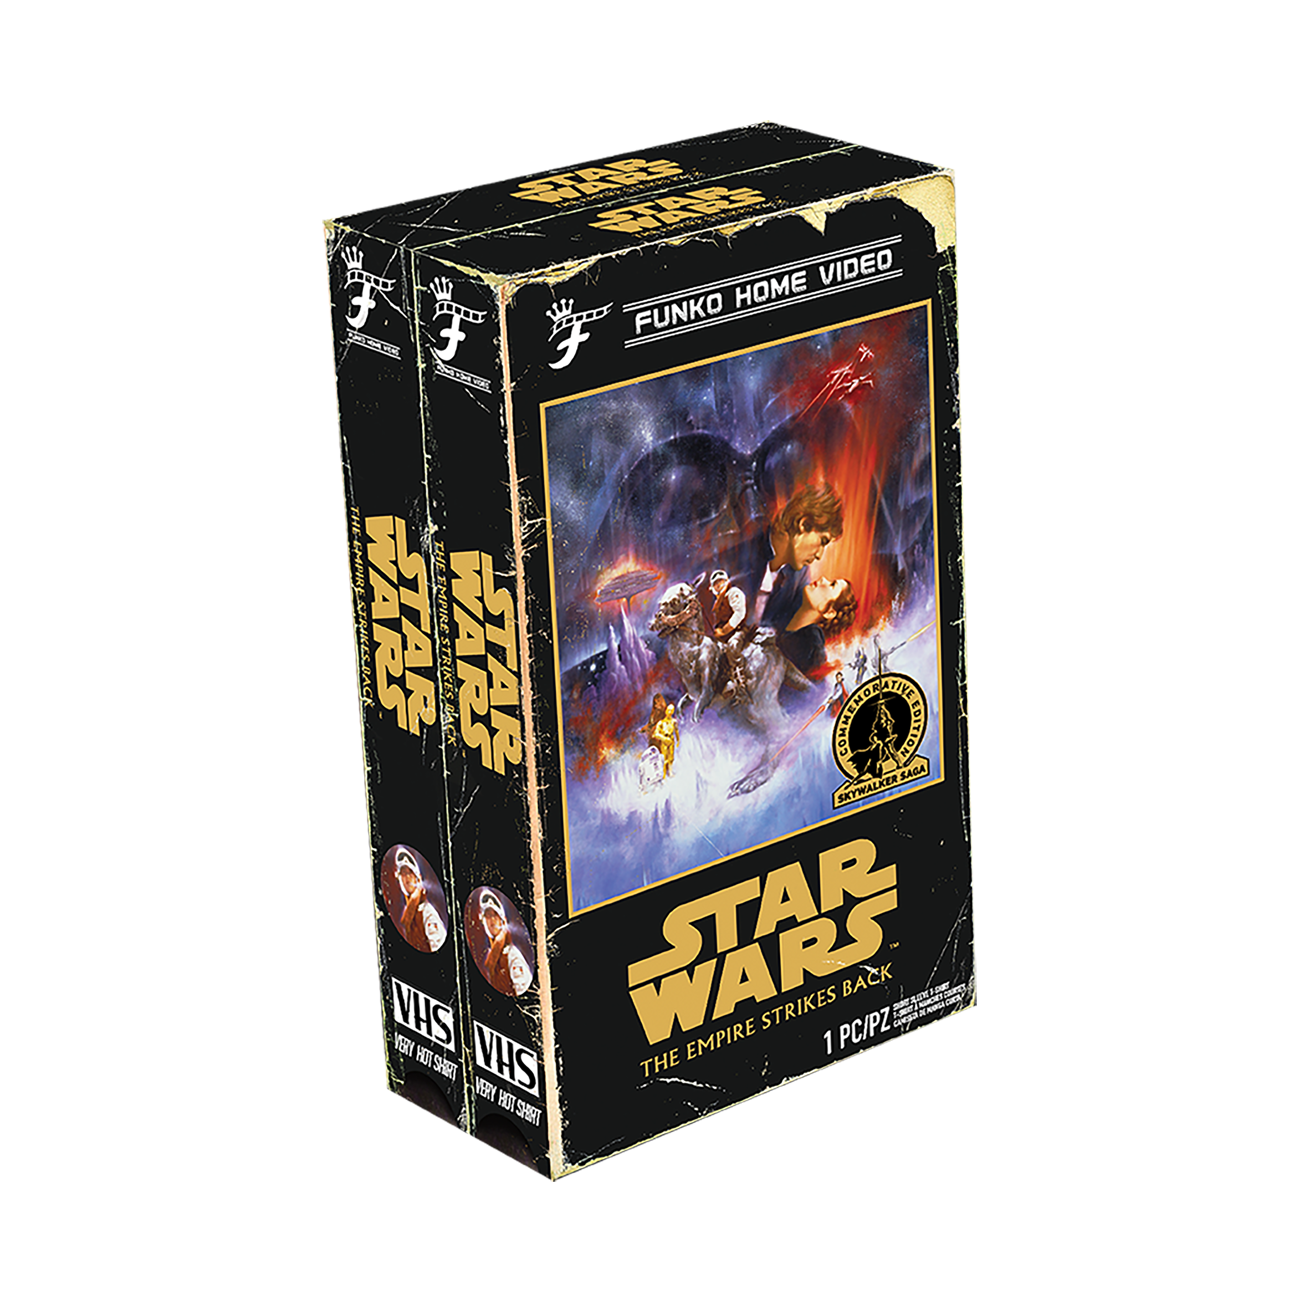 STAR WARS - VHS BOX TEE - THE EMPIRE STRIKES BACK